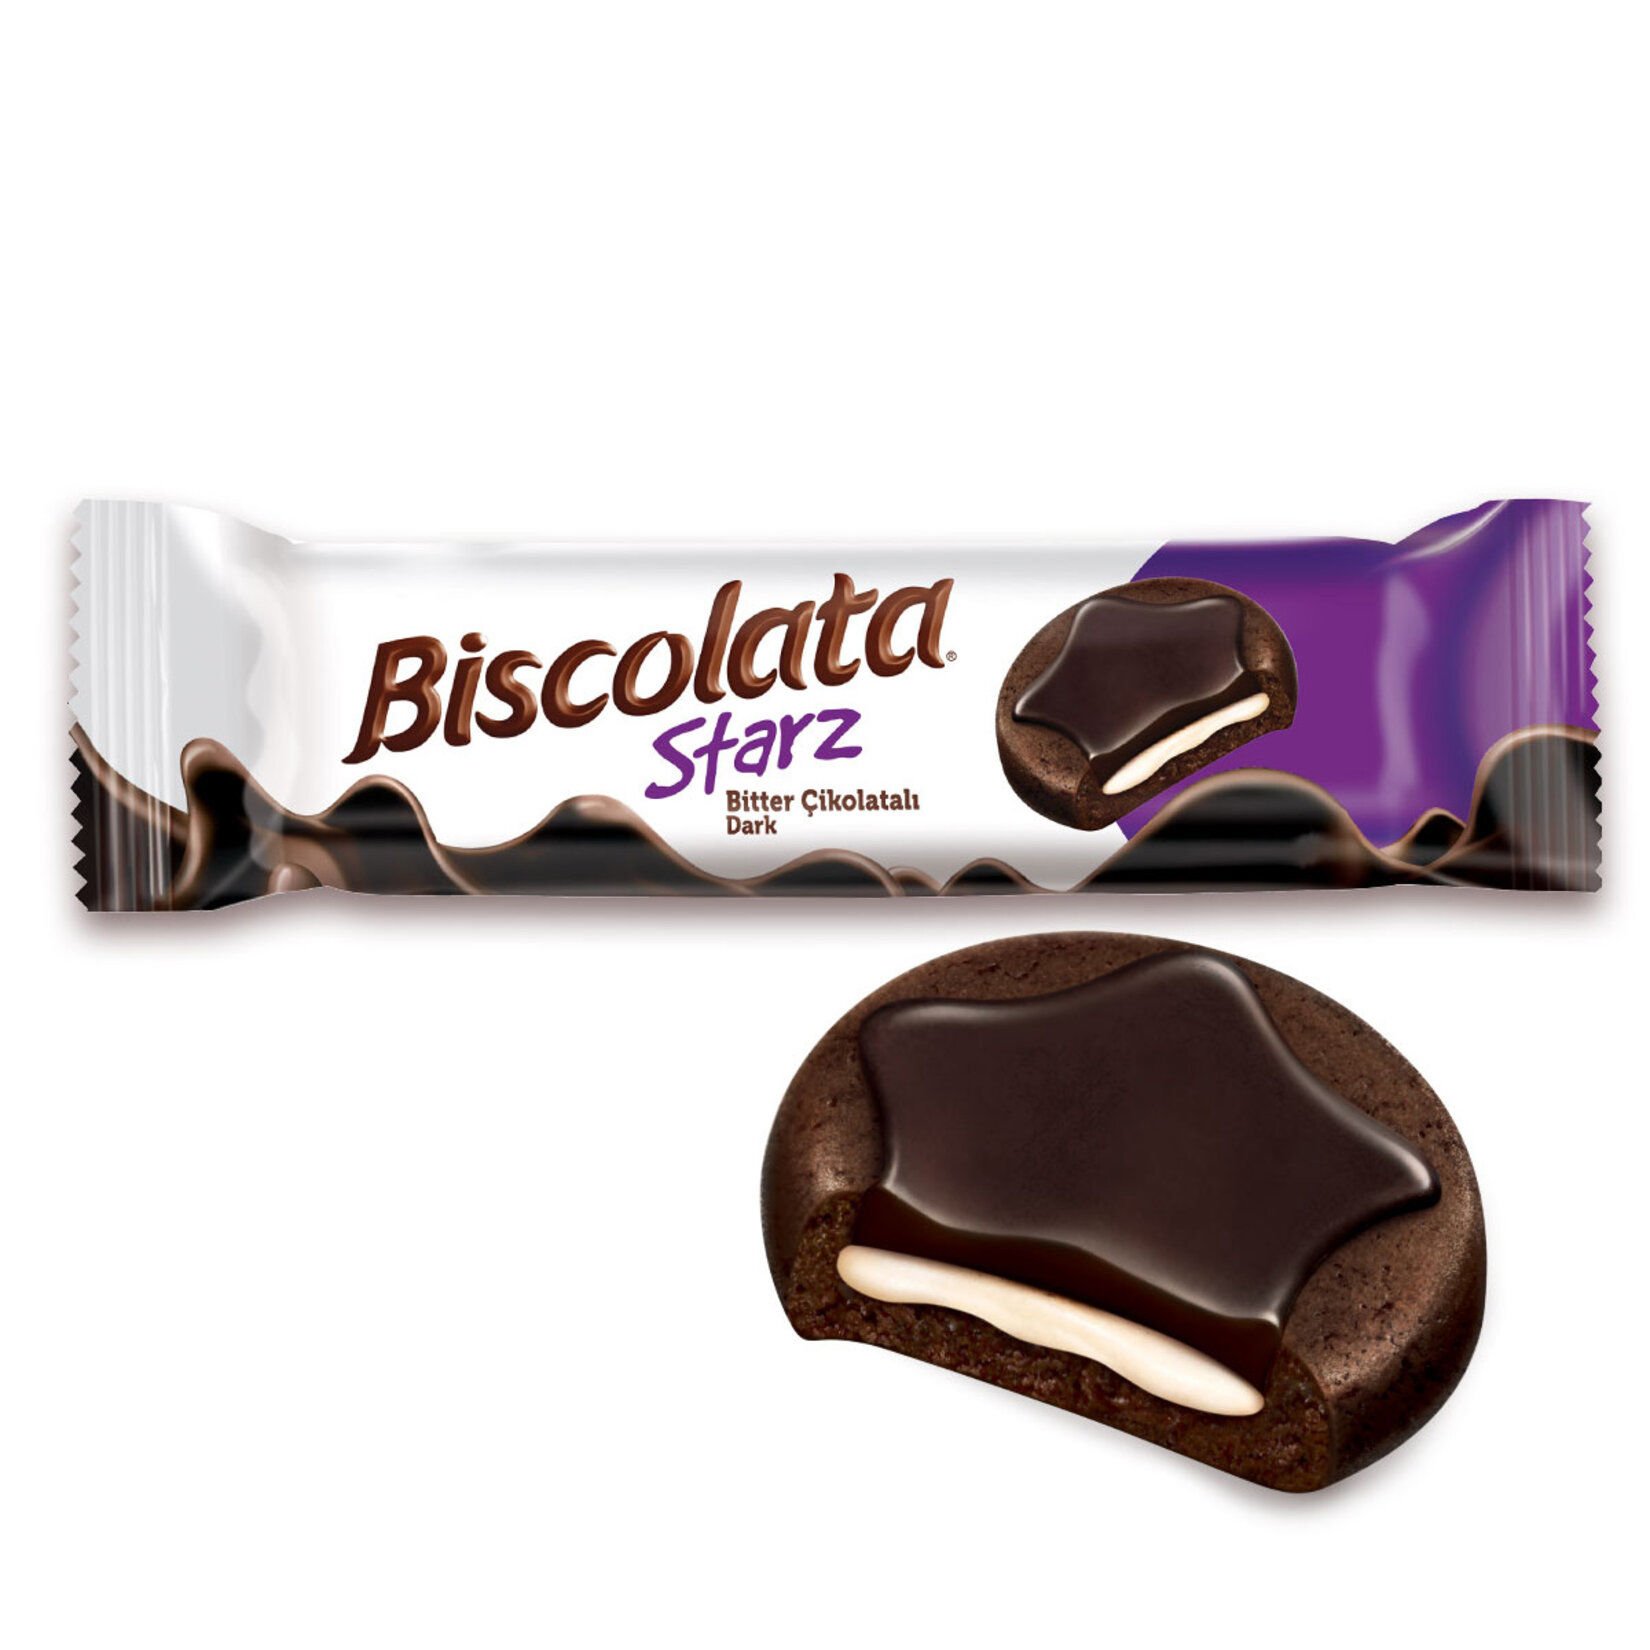 Biscolata Starz Bitter Çikolatalı 82g